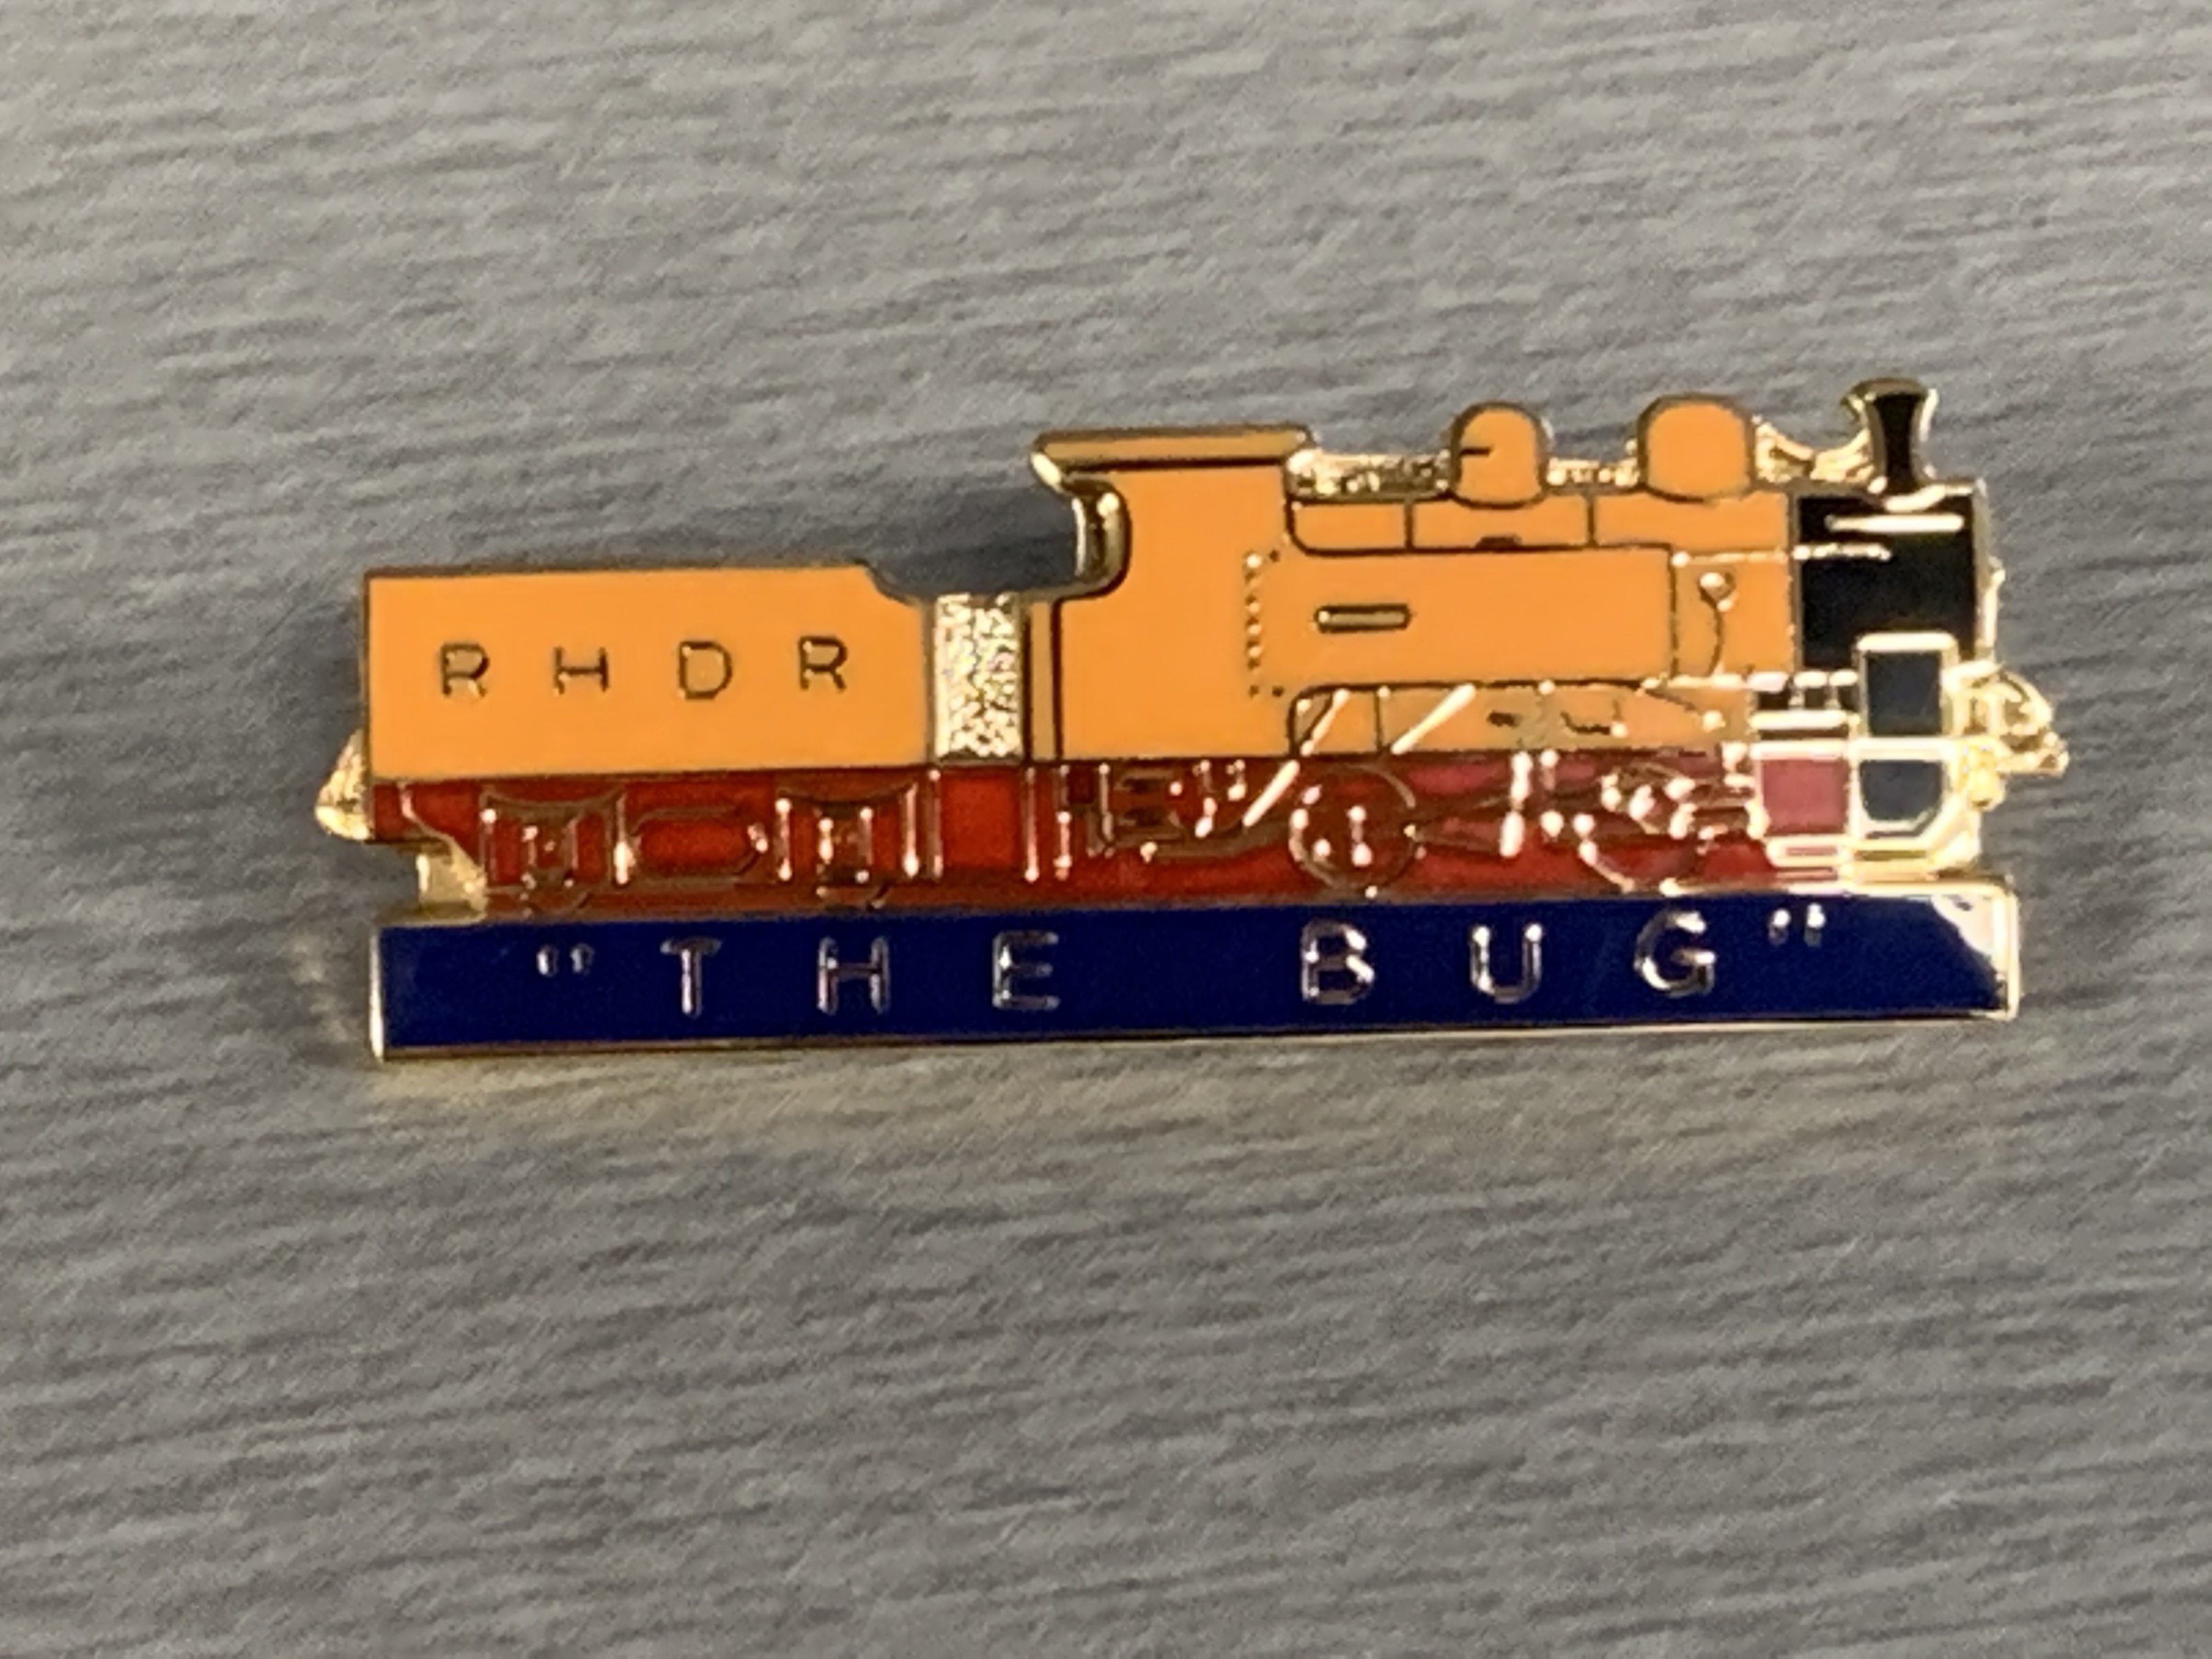 The Bug Locomotive Badge